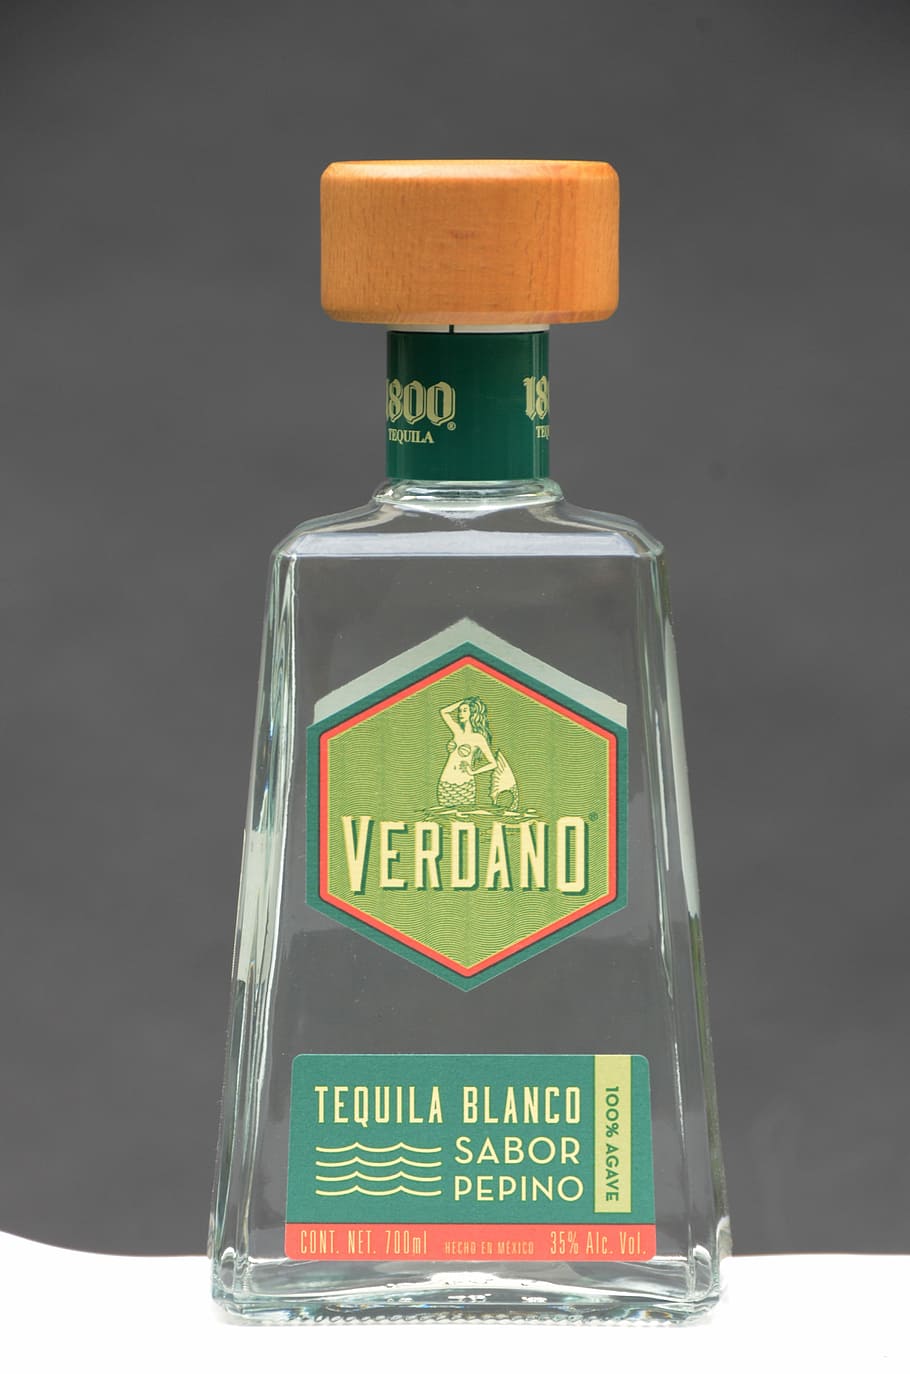 Verdano Tequila, Blanco Tequila Jalisco, superior tequila, bottle